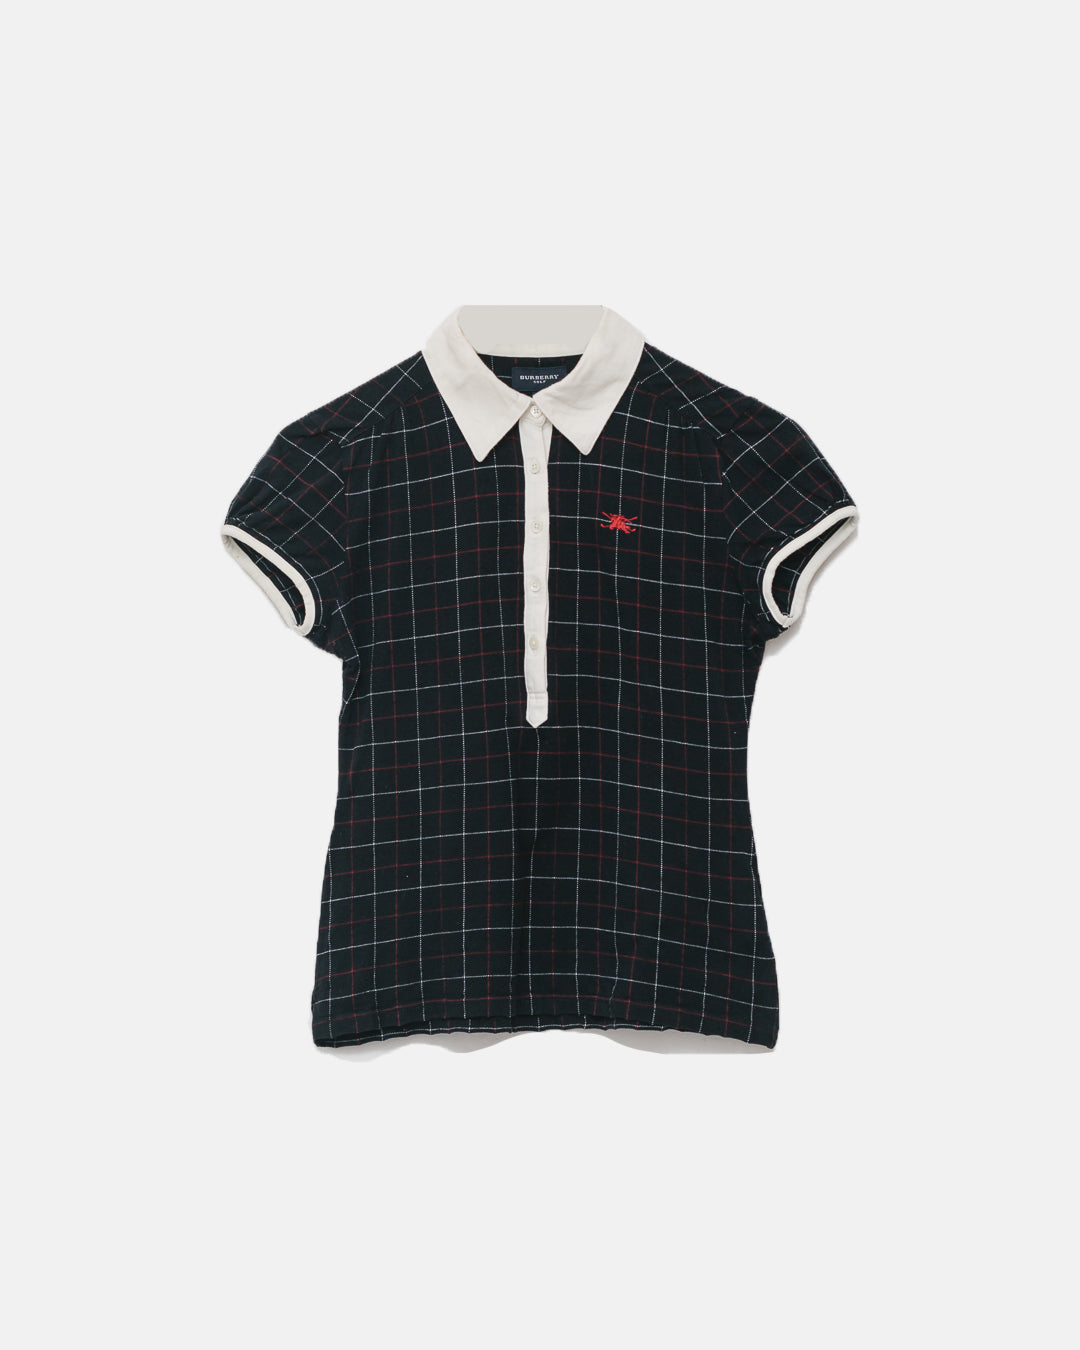 Burberry Golf Check Polo Neck Tshirt